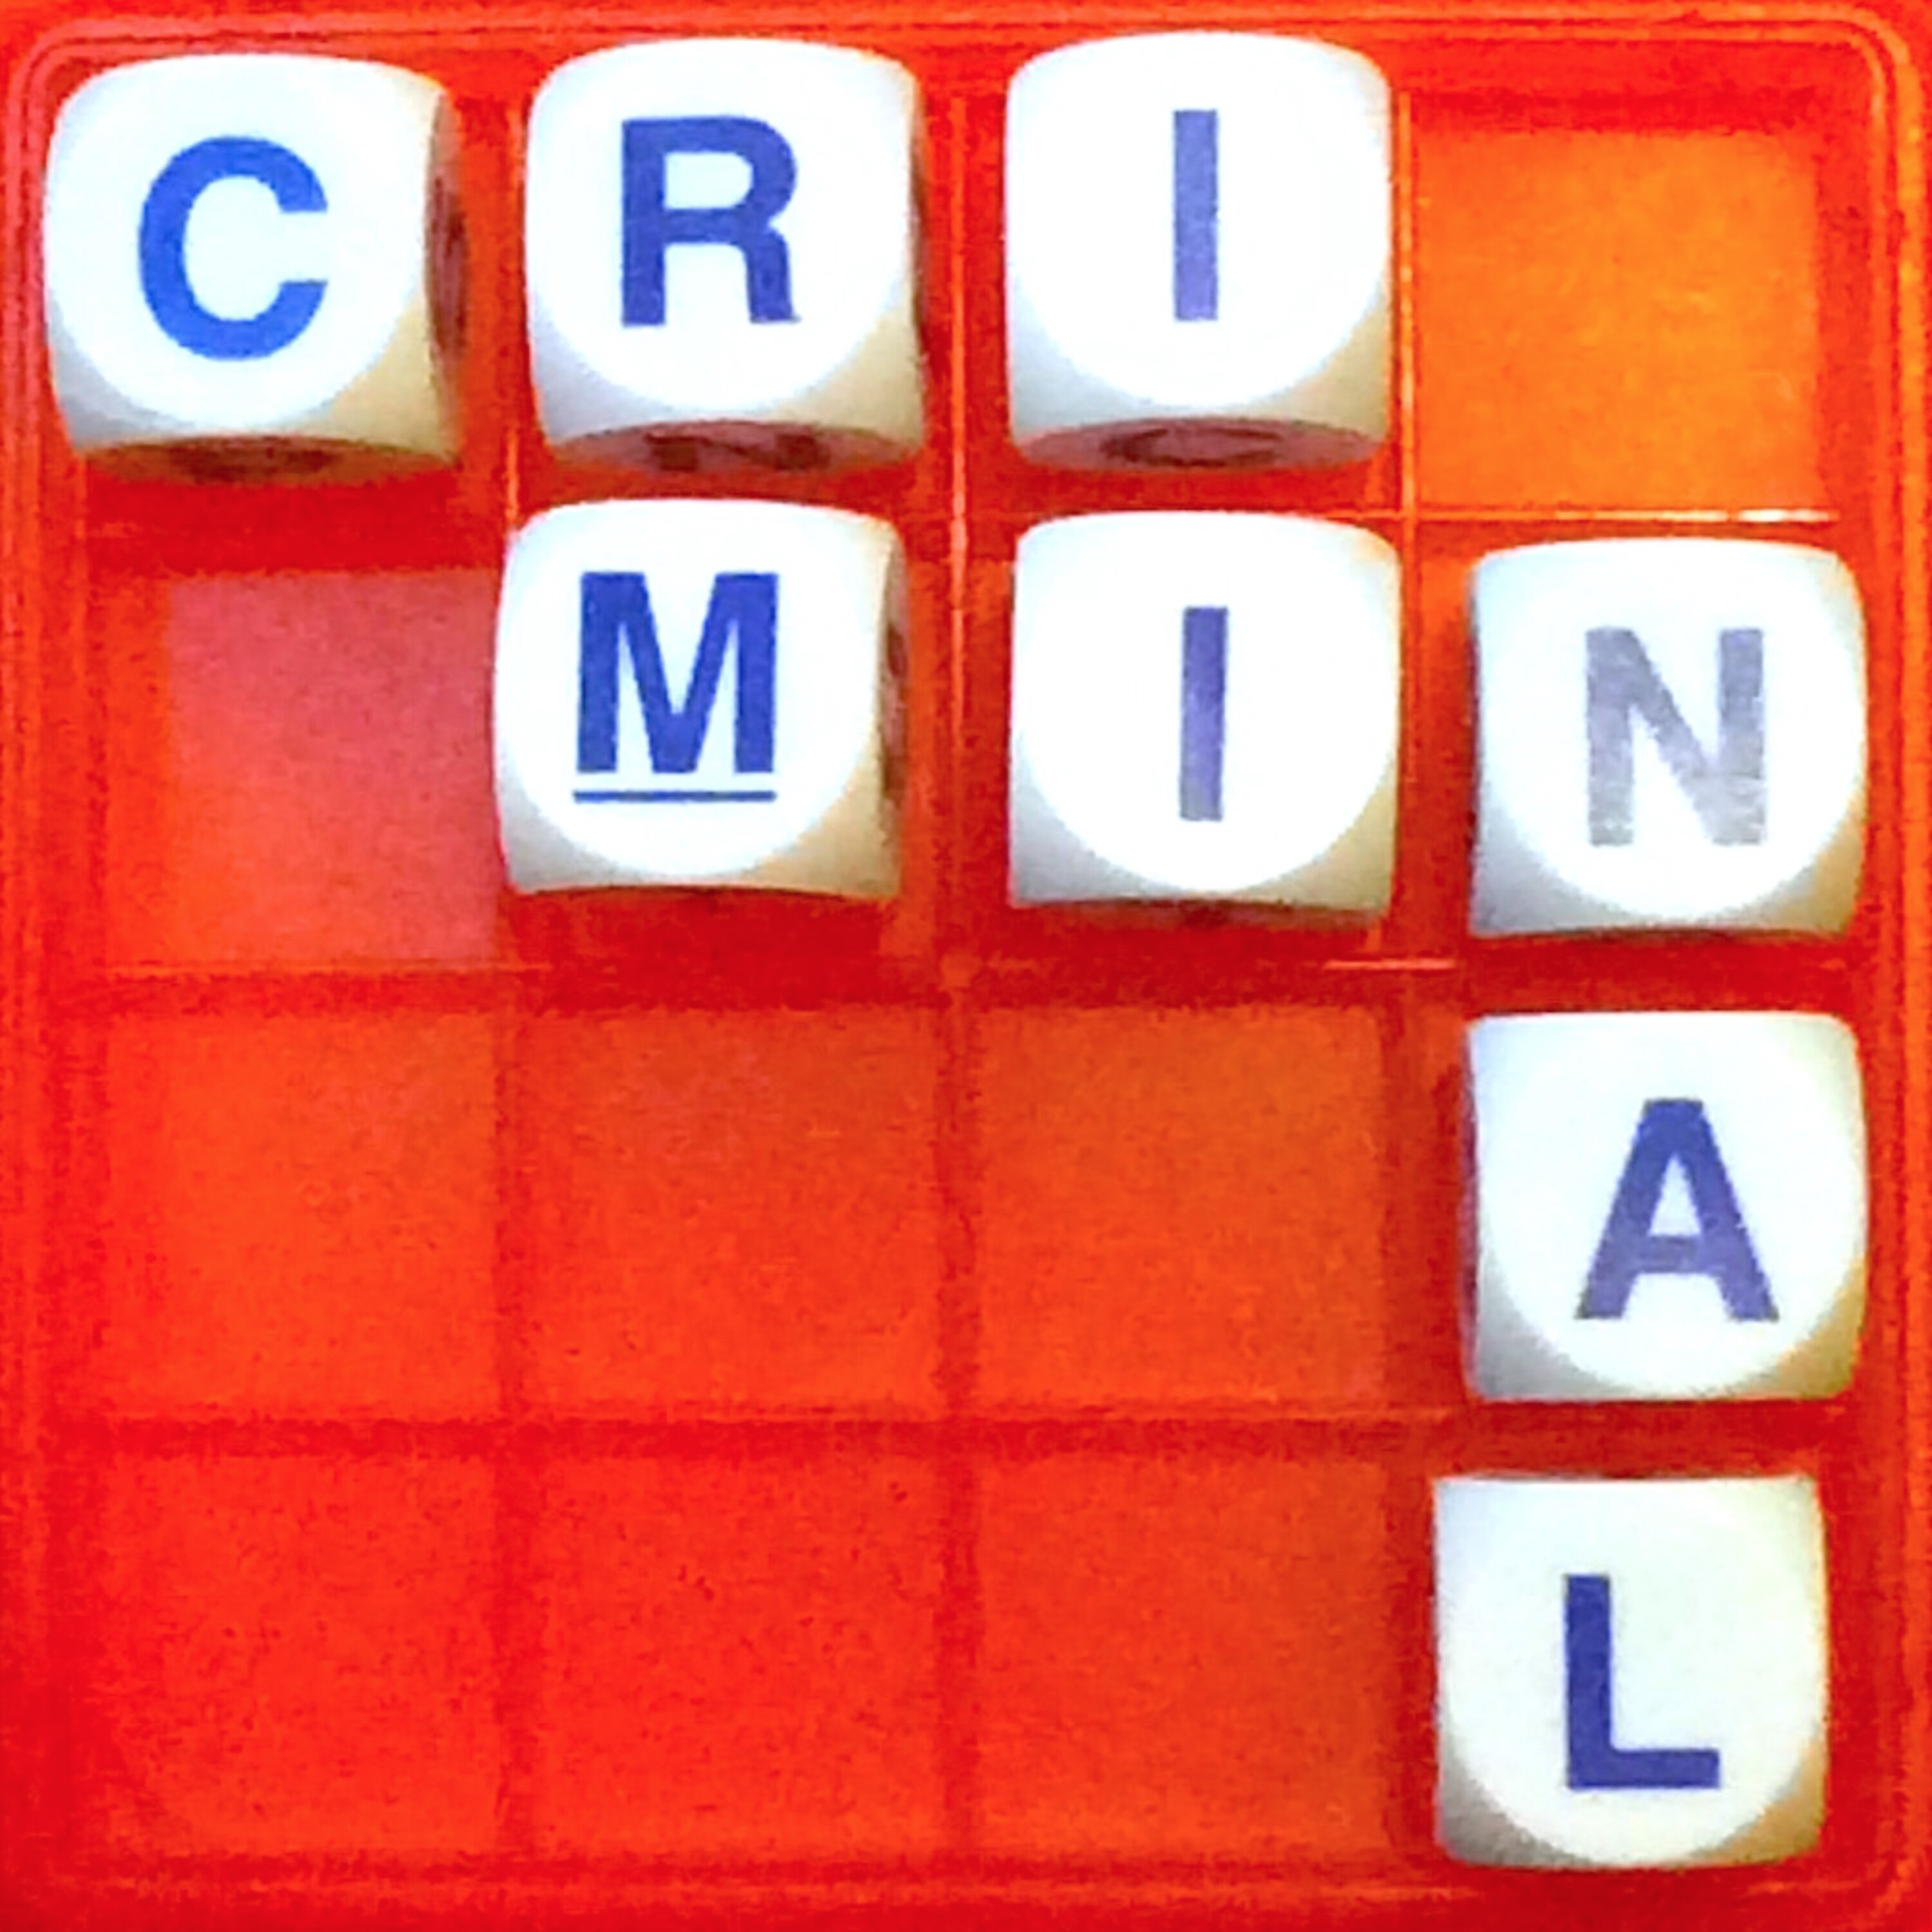 Thumbnail for "23. Criminallusionist".